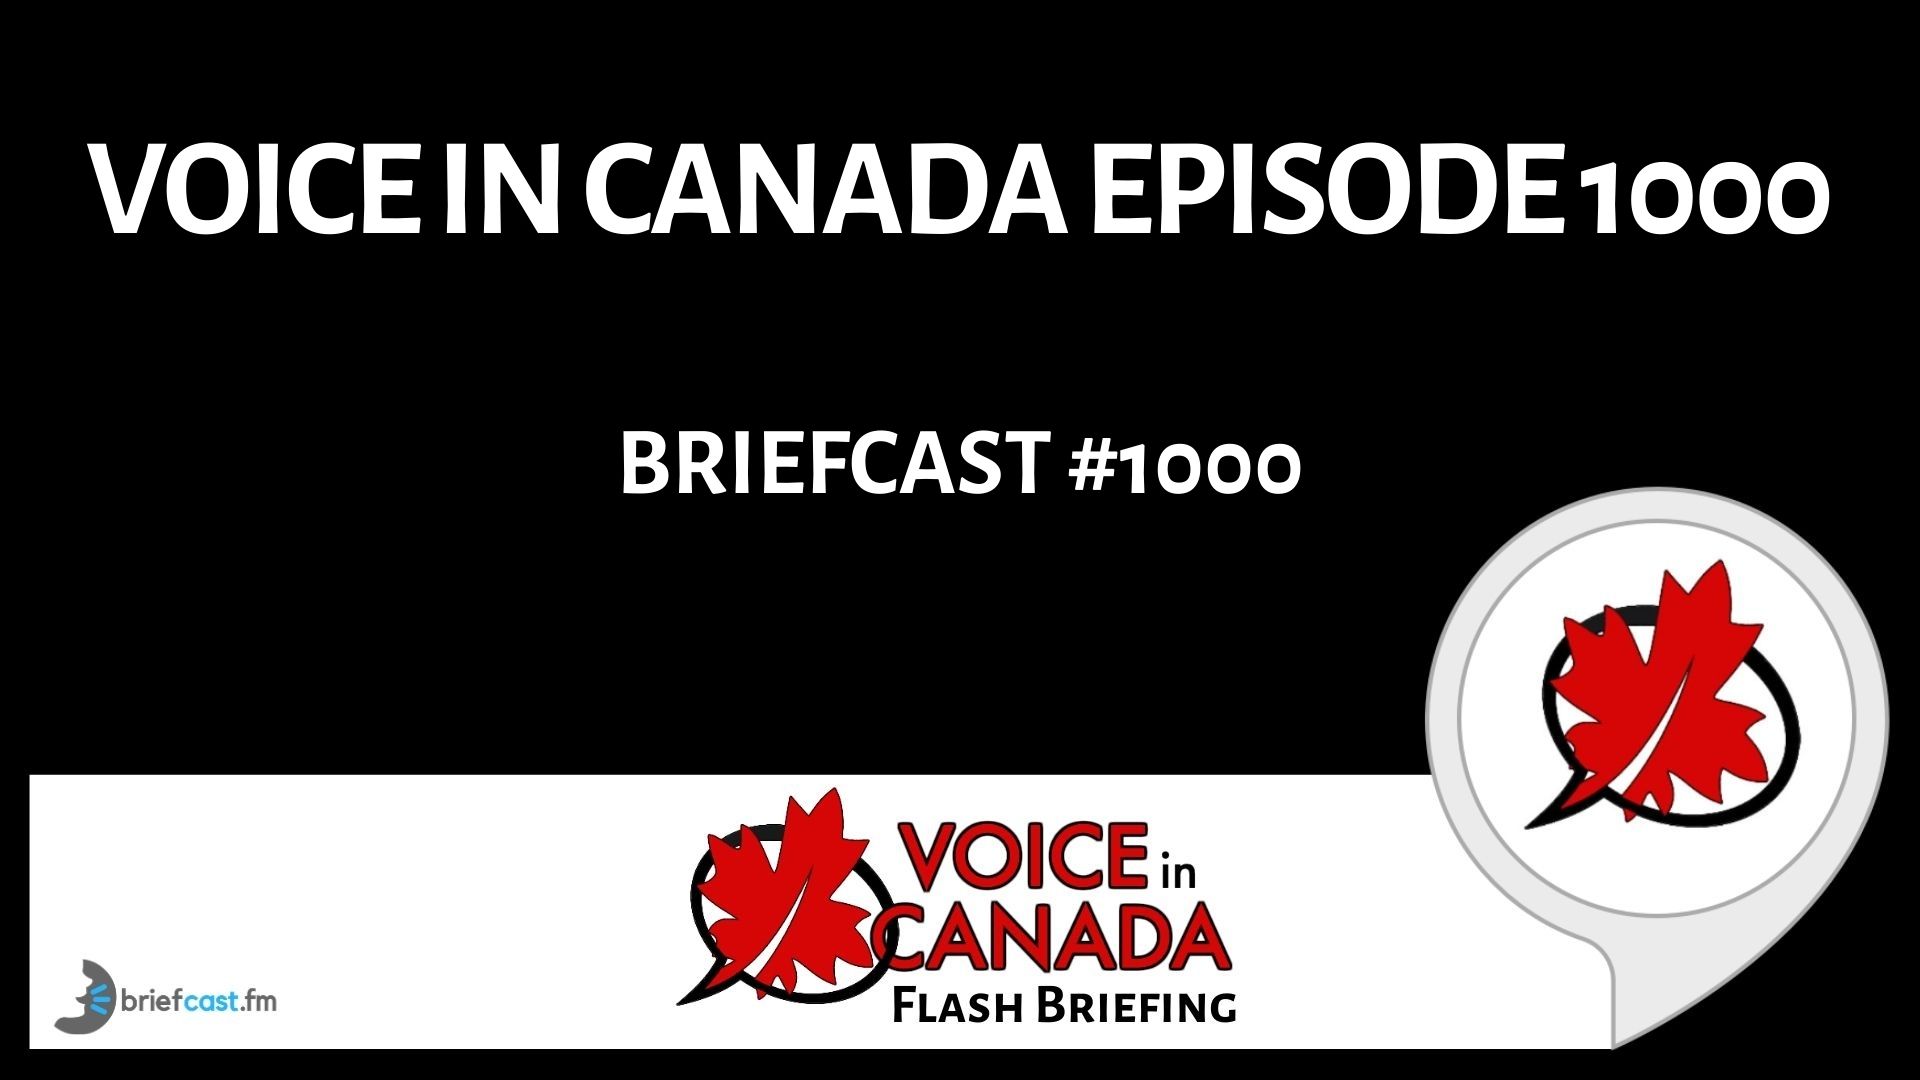 VOICE IN CANADA EPISODE 1000